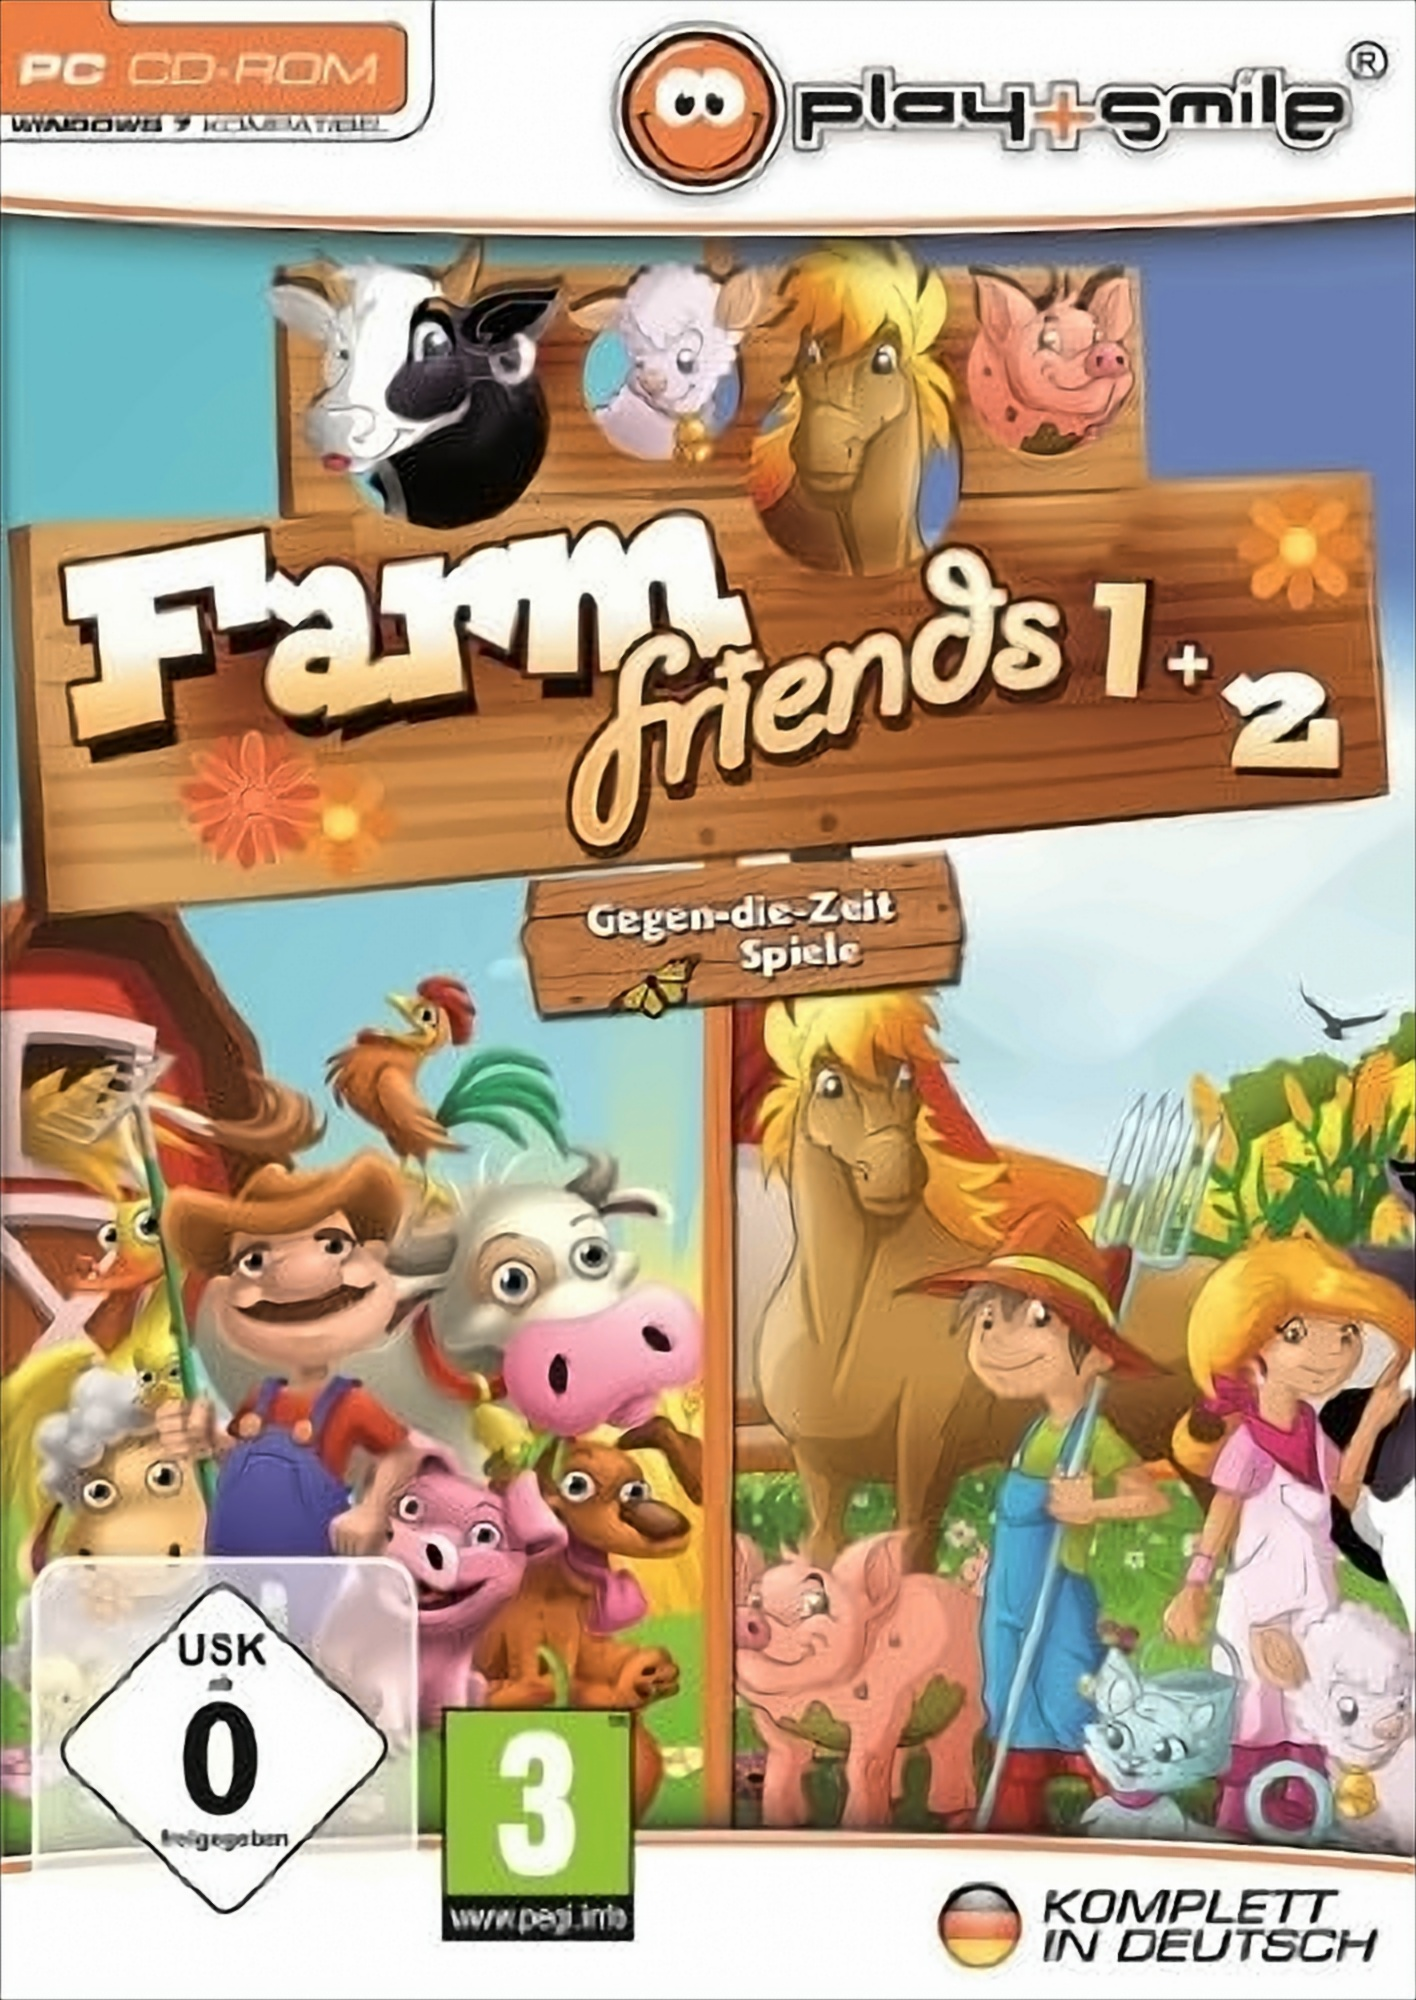 Farm Friends 2 - 1 [PC] 